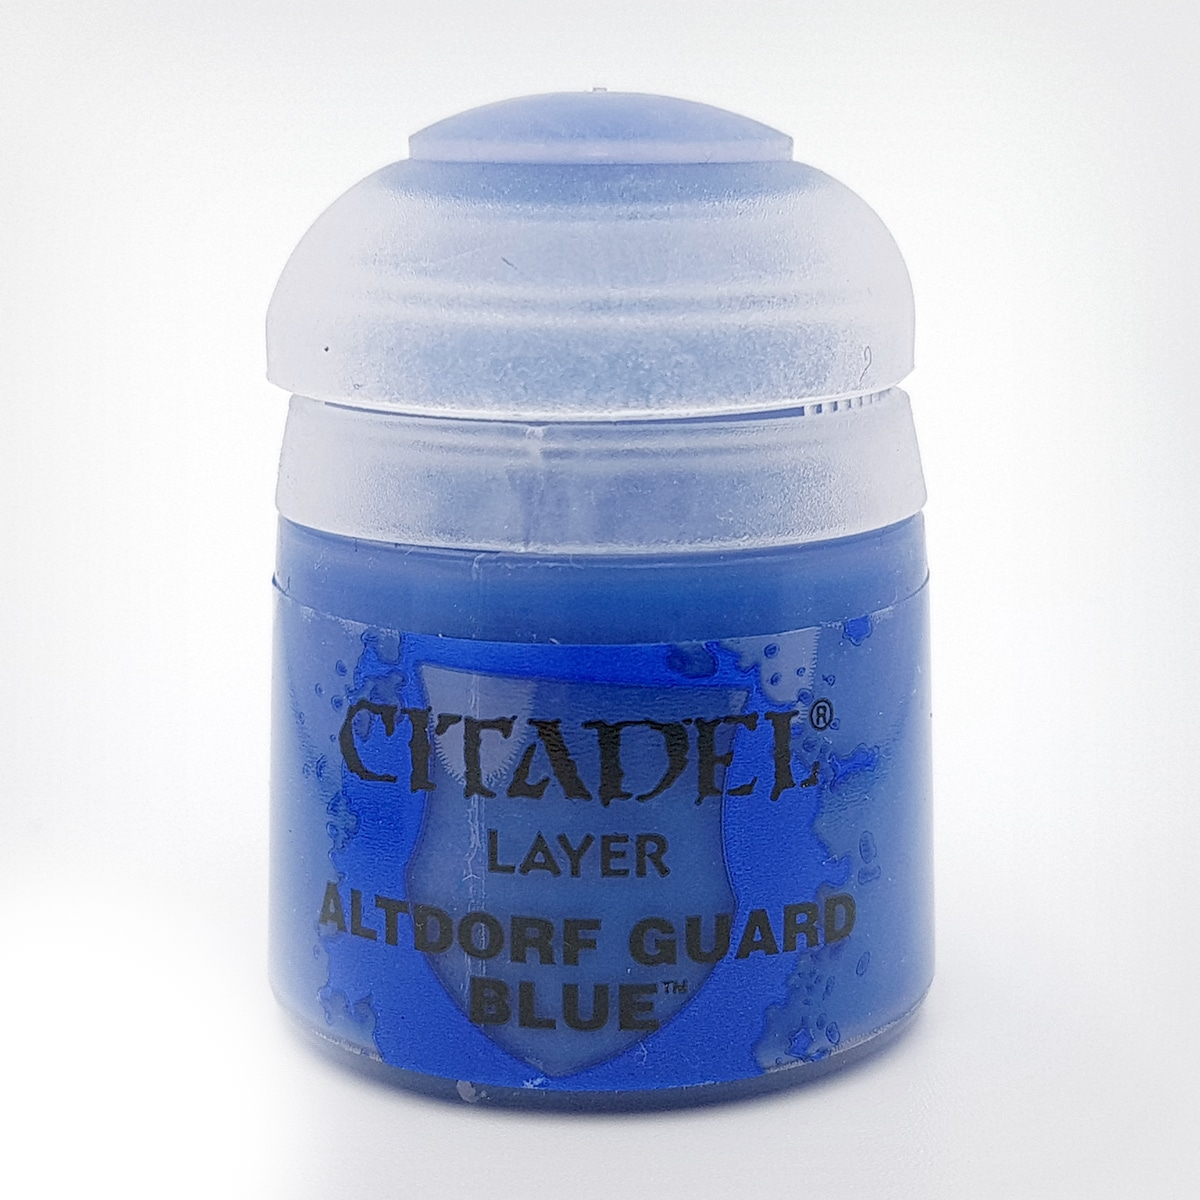 Altdorf Guard Blue (12ml) – OnTableTop Store